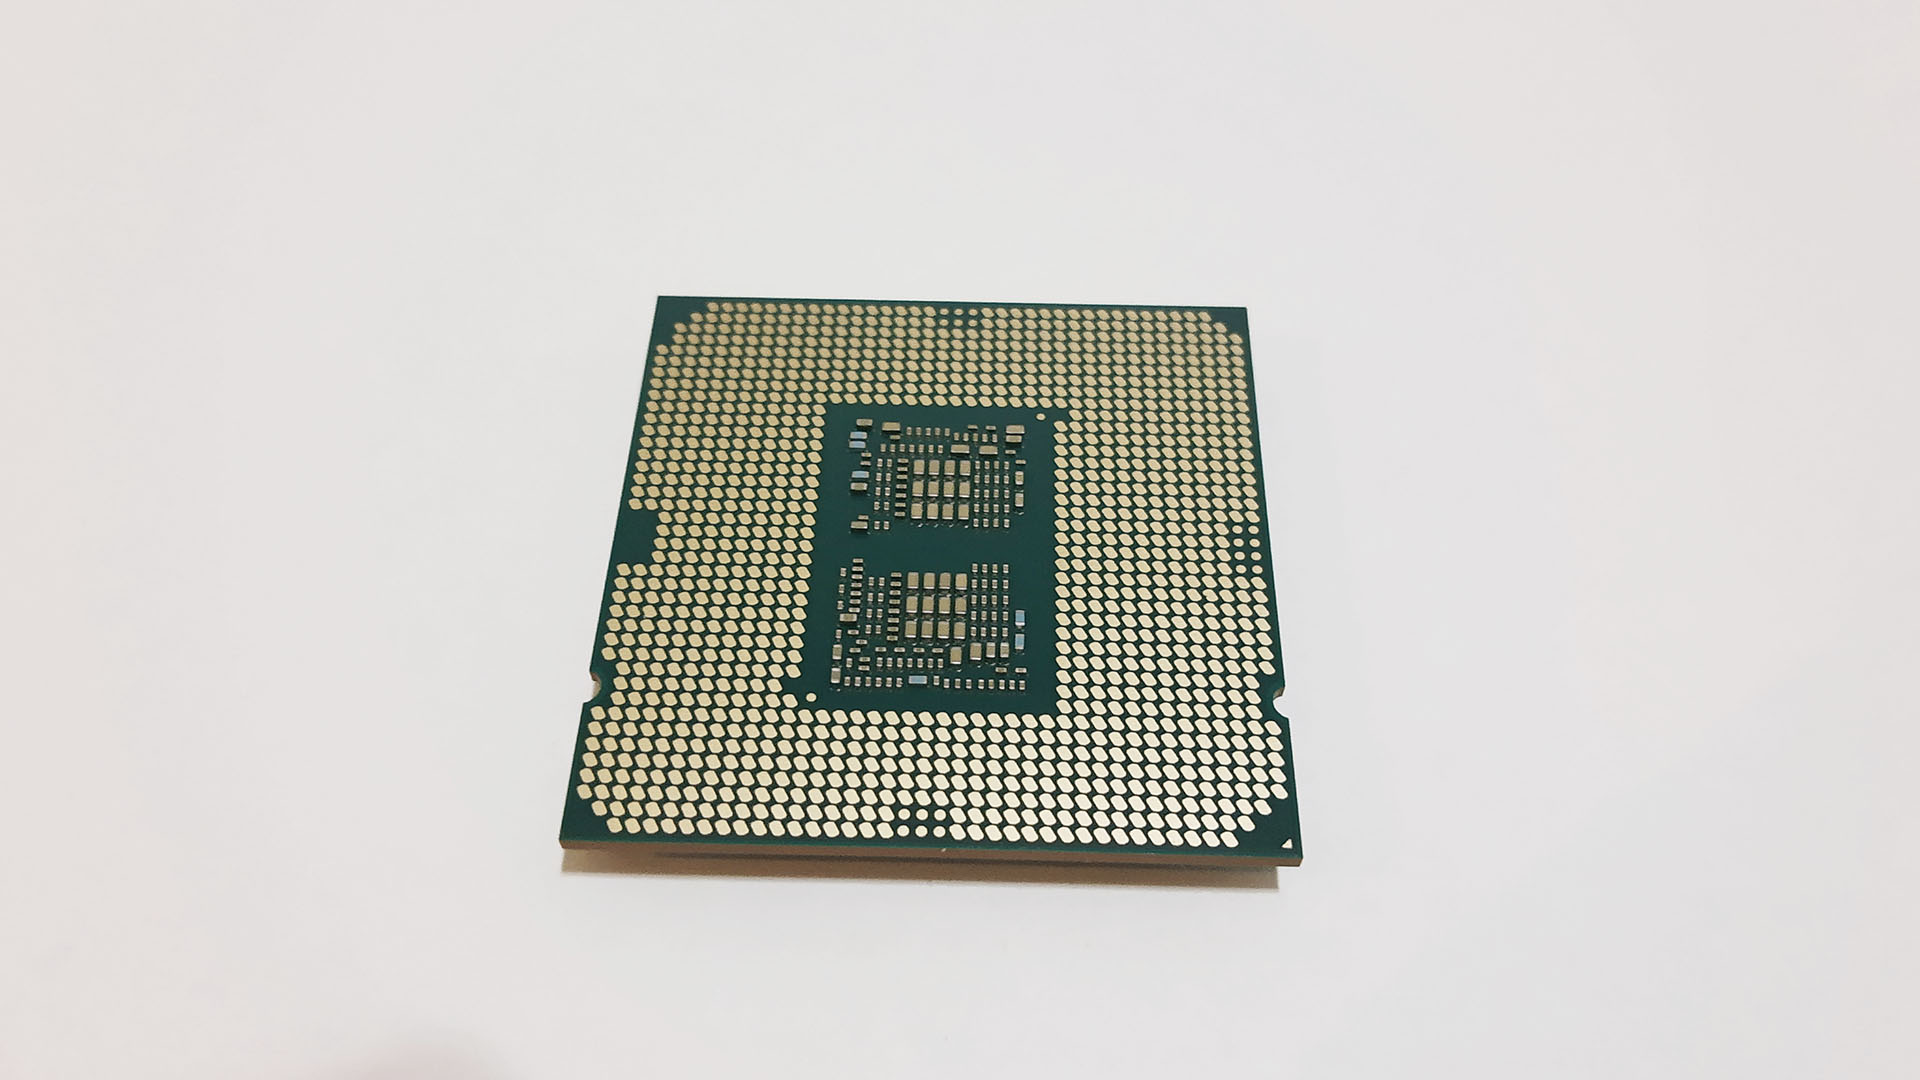 Intel Core i5-10600K - Review